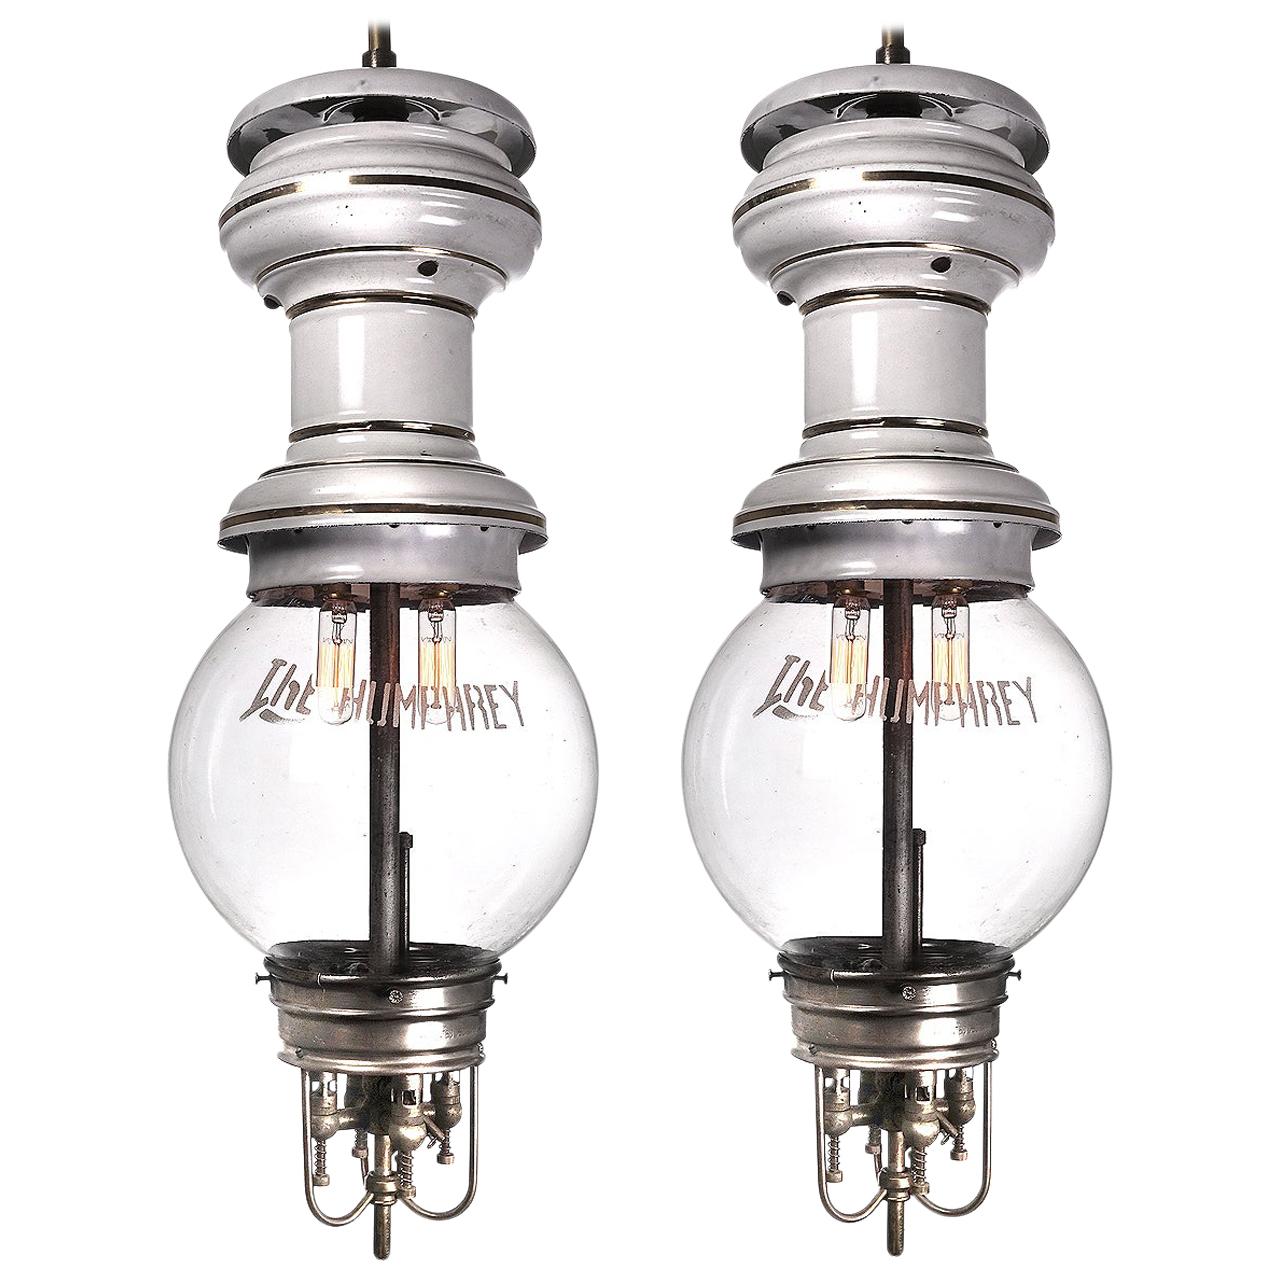 Large Rare 1901 Humphery Gas Lamps, Electrified